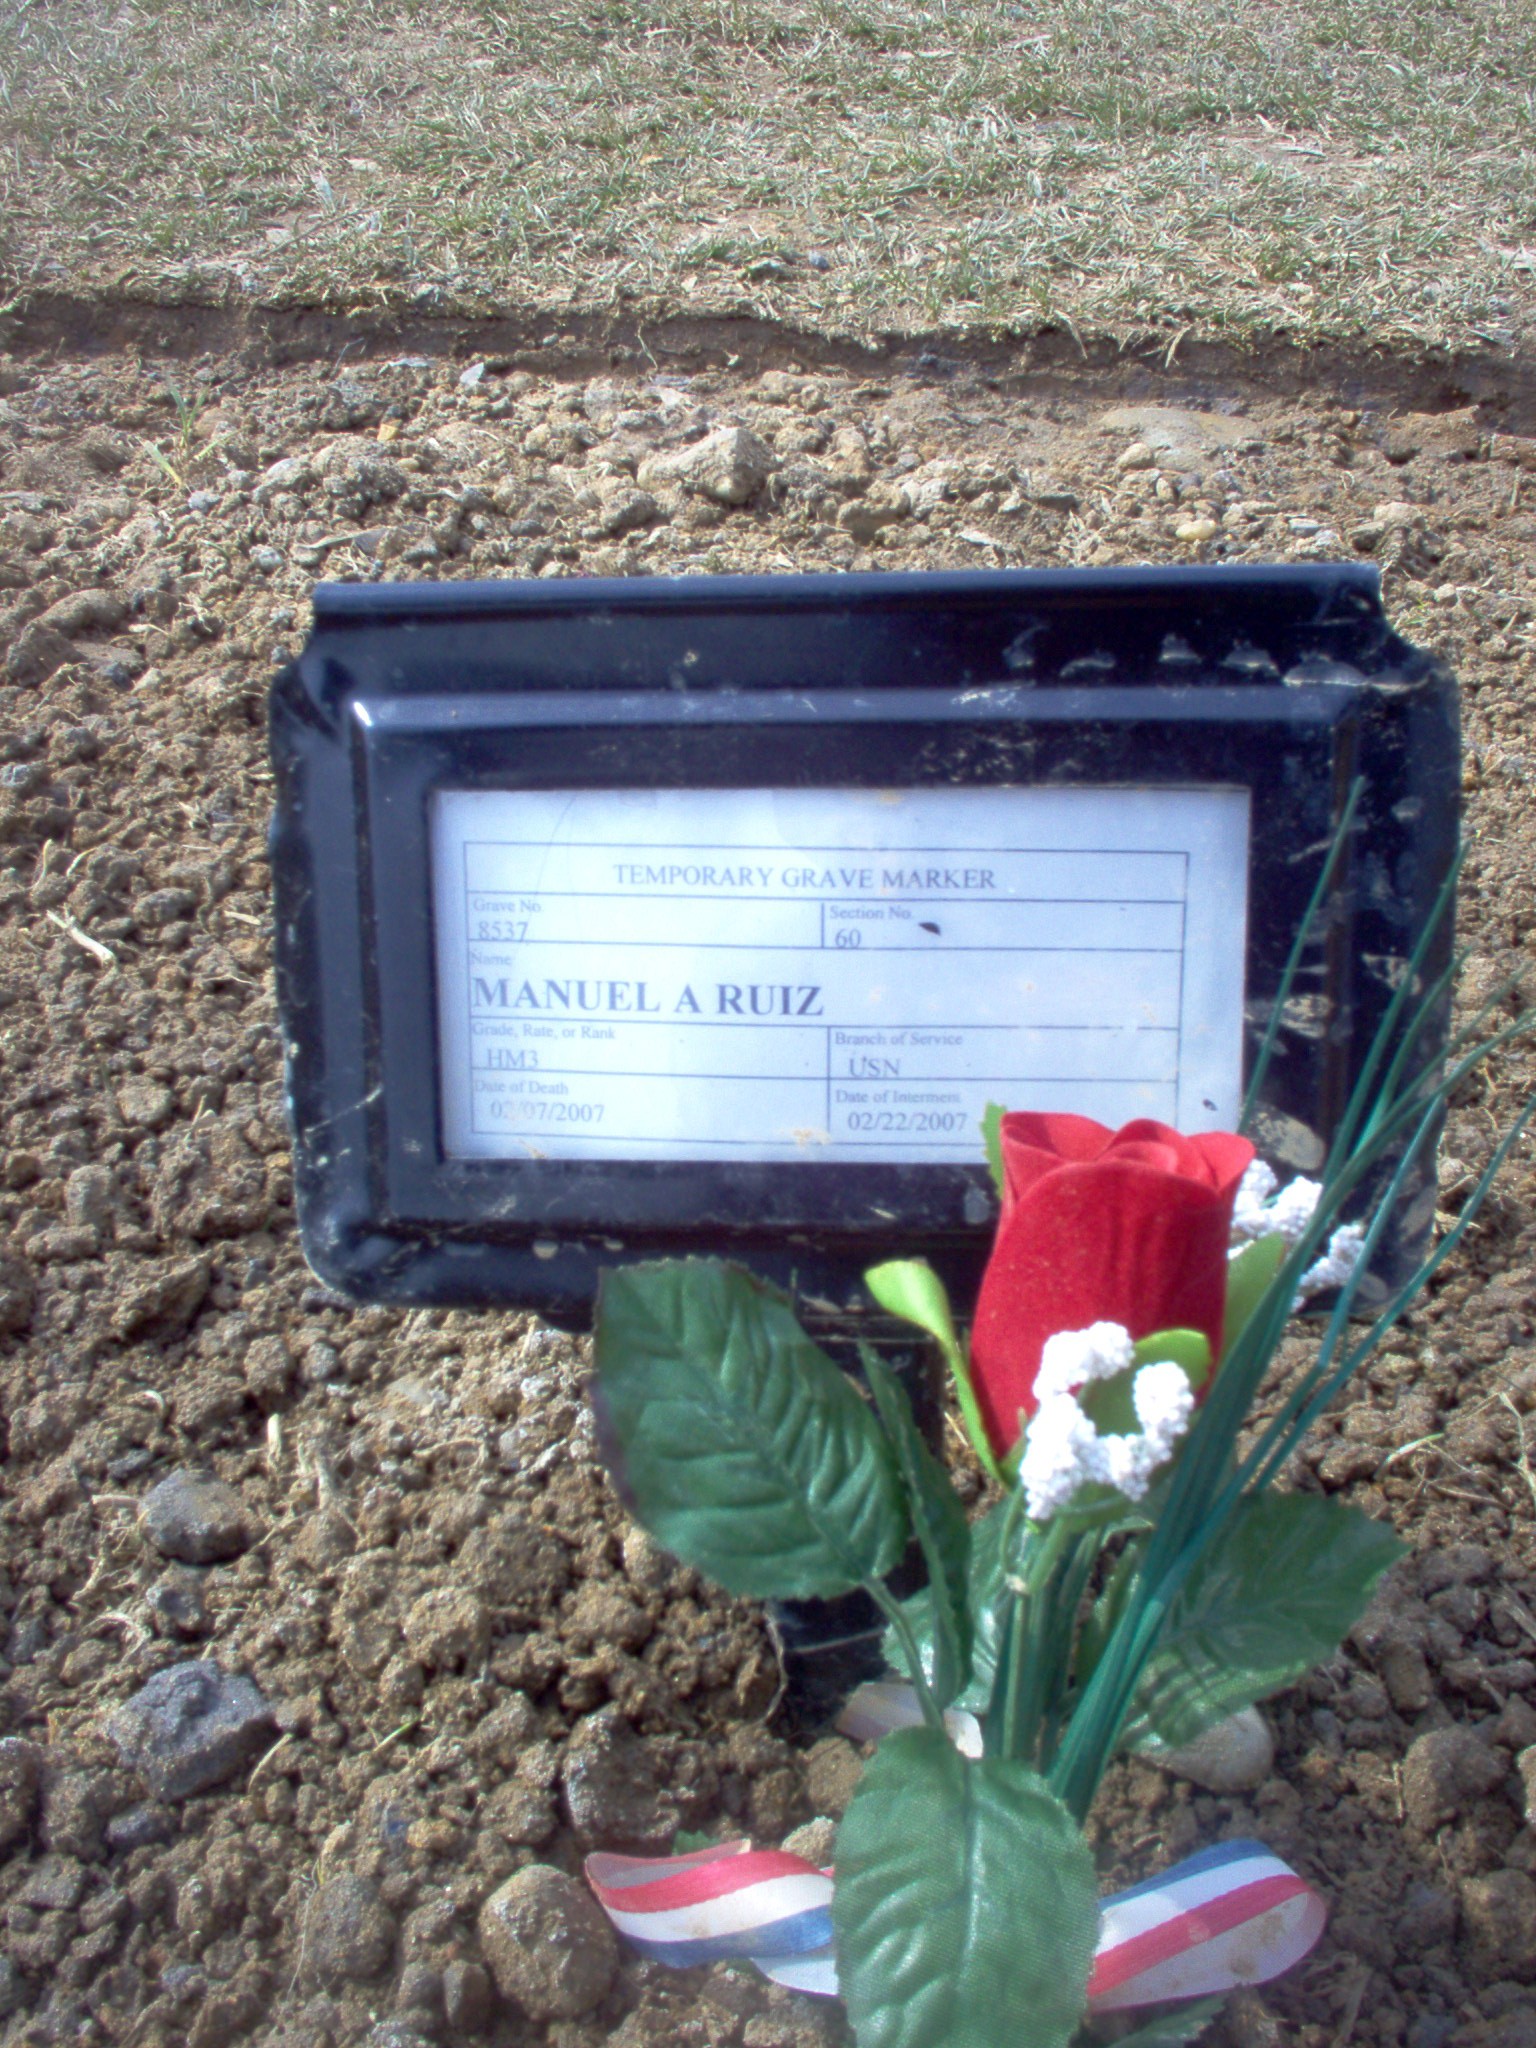 maruiz-gravesite-photo-march-2007-001